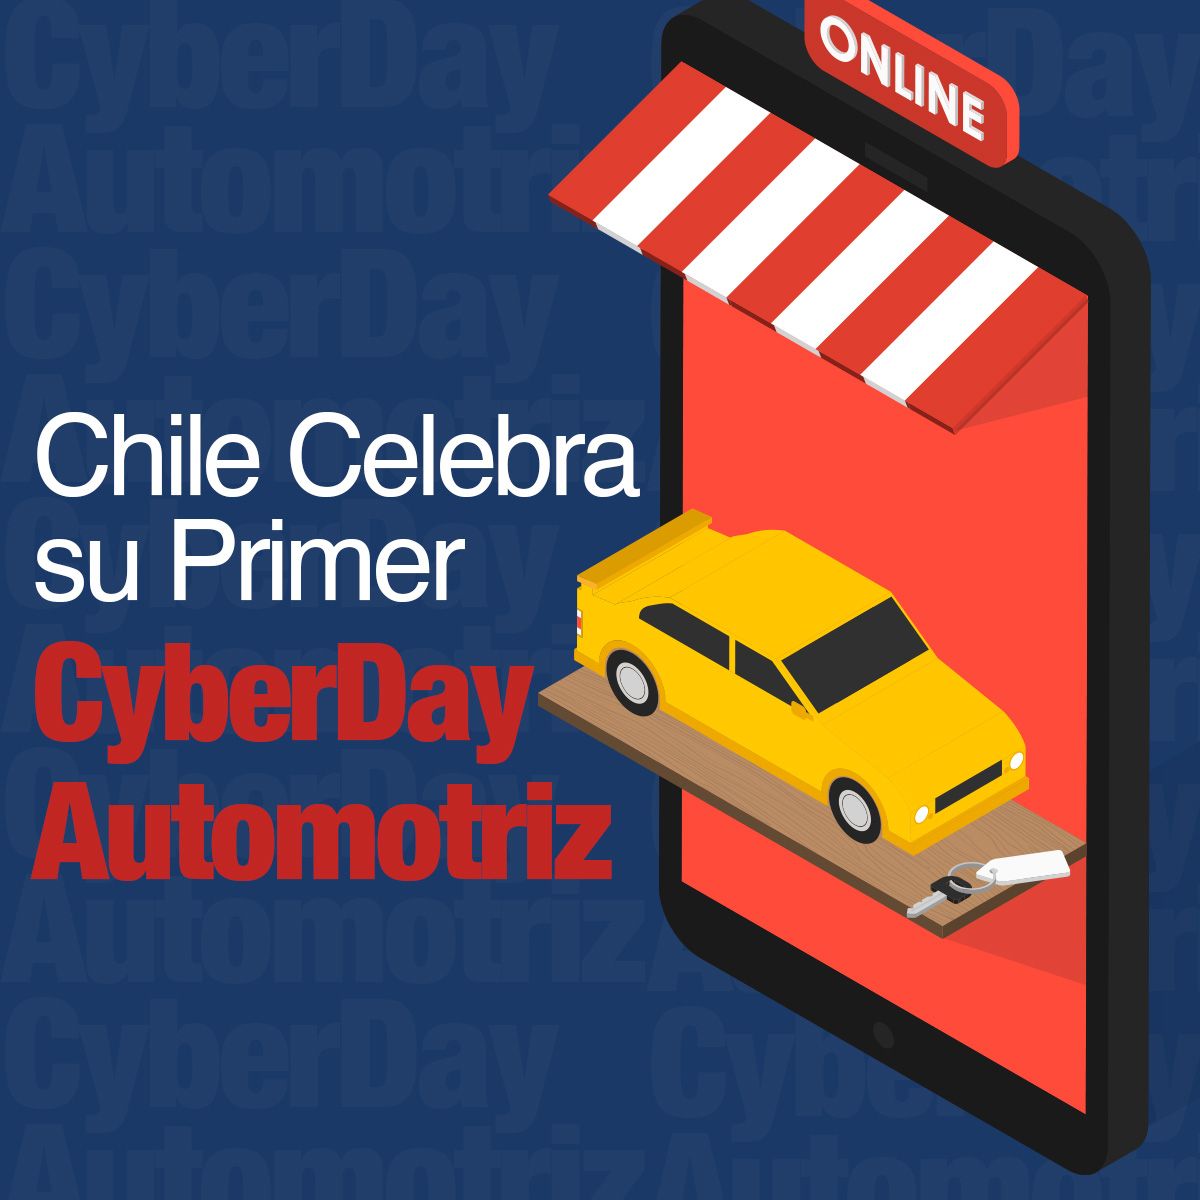 Chile Celebra su Primer CyberDay Automotriz